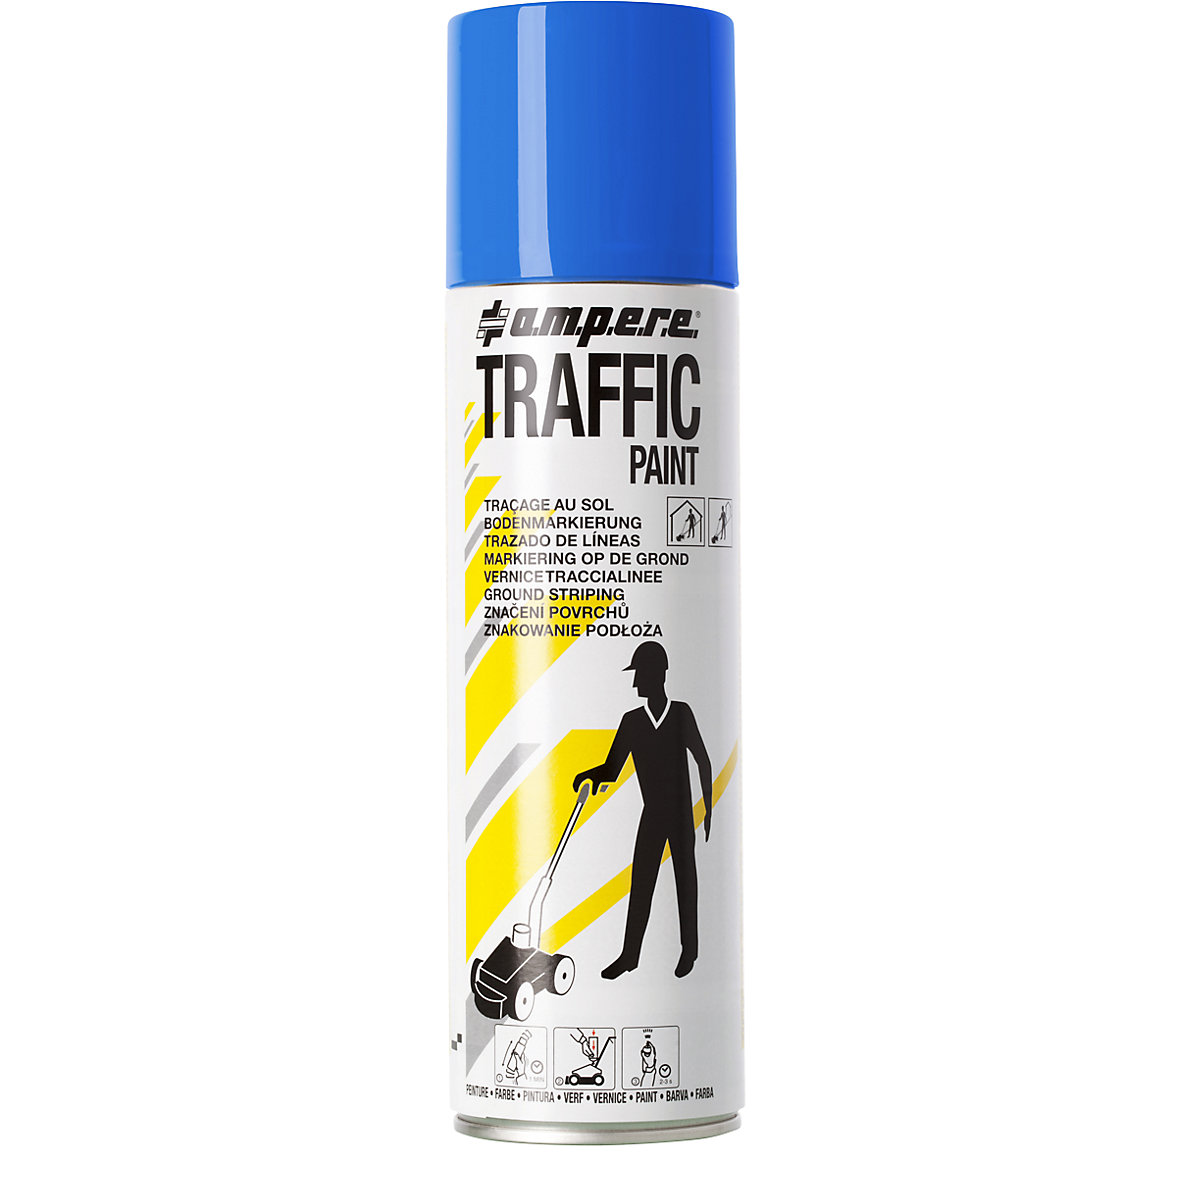 Tinta de marcação Traffic Paint® – Ampere, volume 500 ml, embalagem 12 latas, azul-6